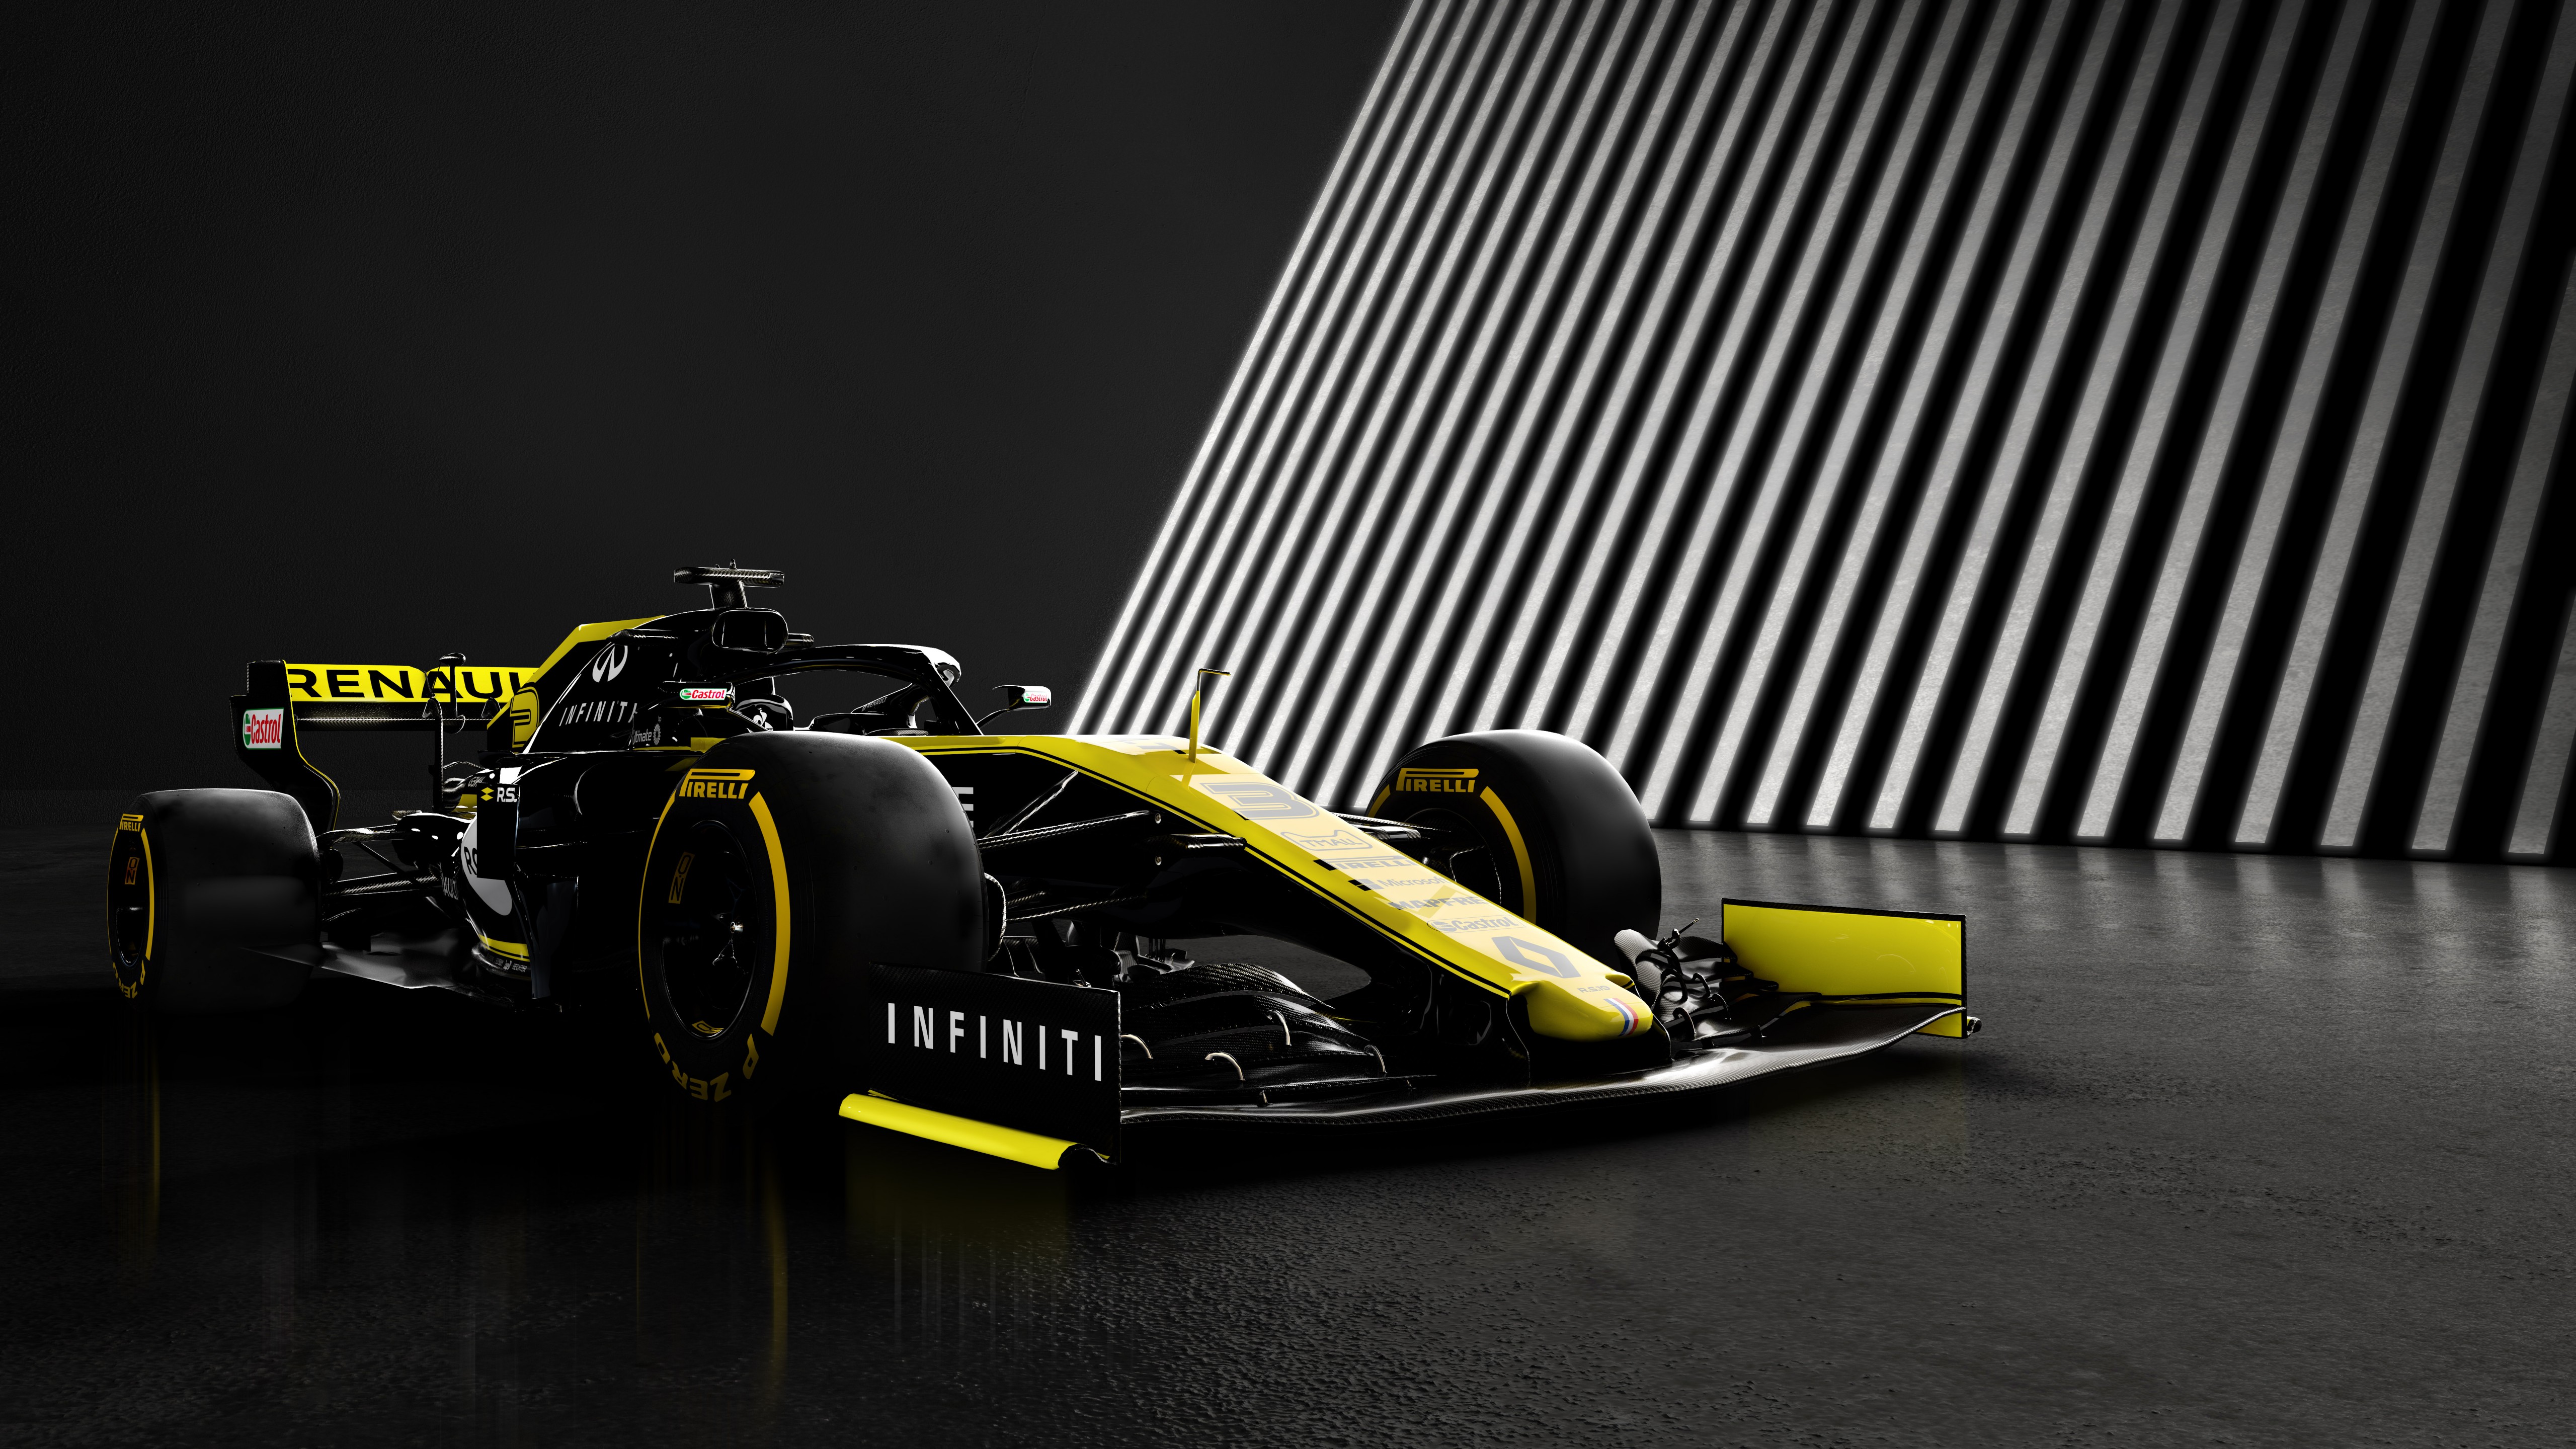 Renault R S 19 Formula 1 Vehicle 2019 Yellow Cars Black Formula Cars Front Angle View 5120x2880